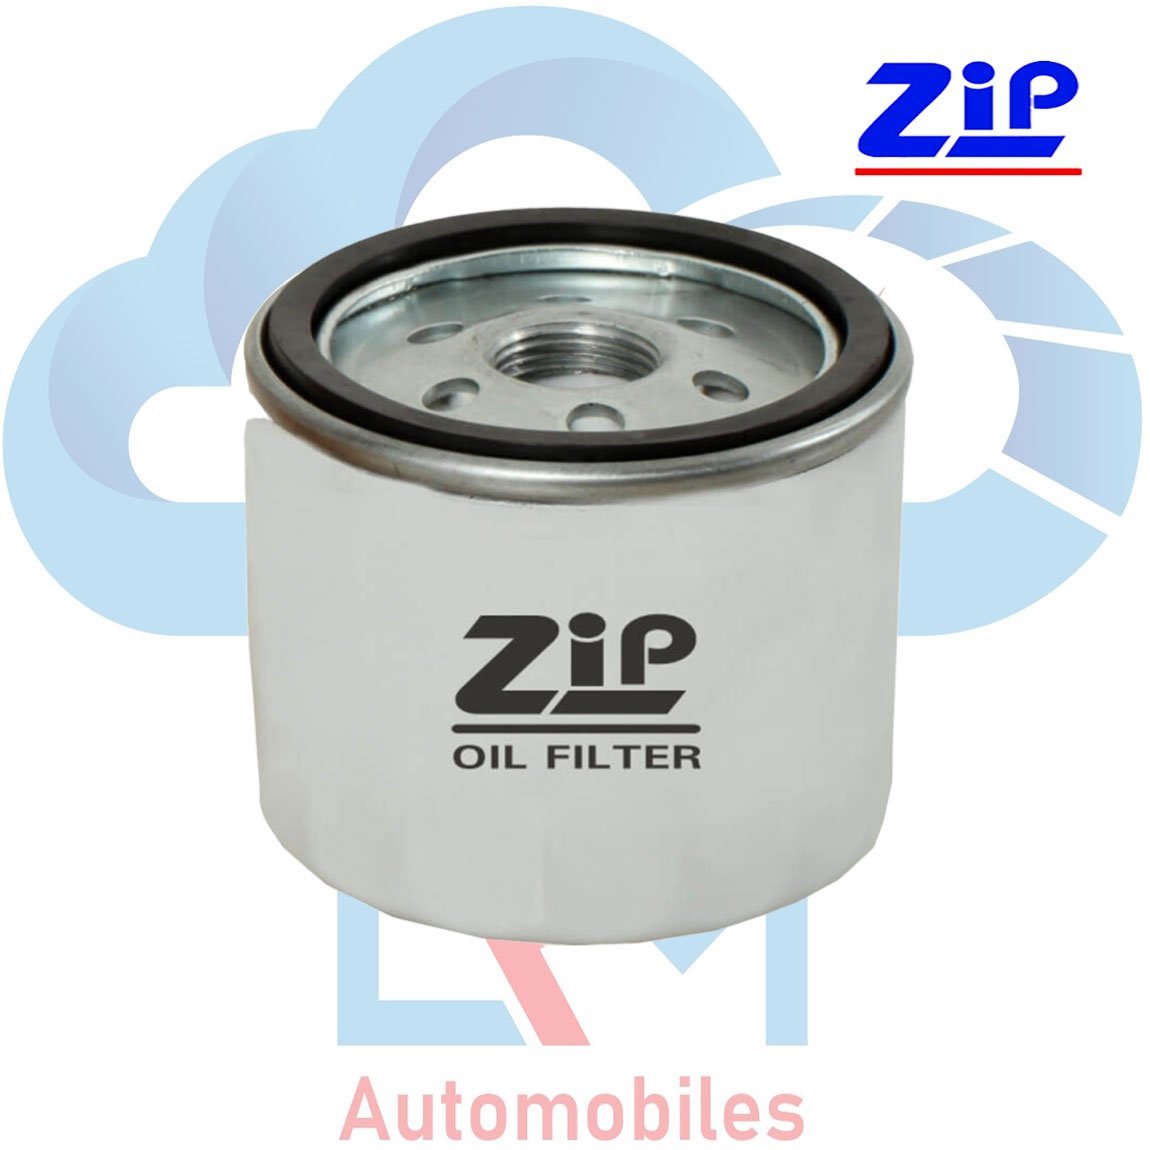 Oil Filter for Honda Amaze in Zip Filter